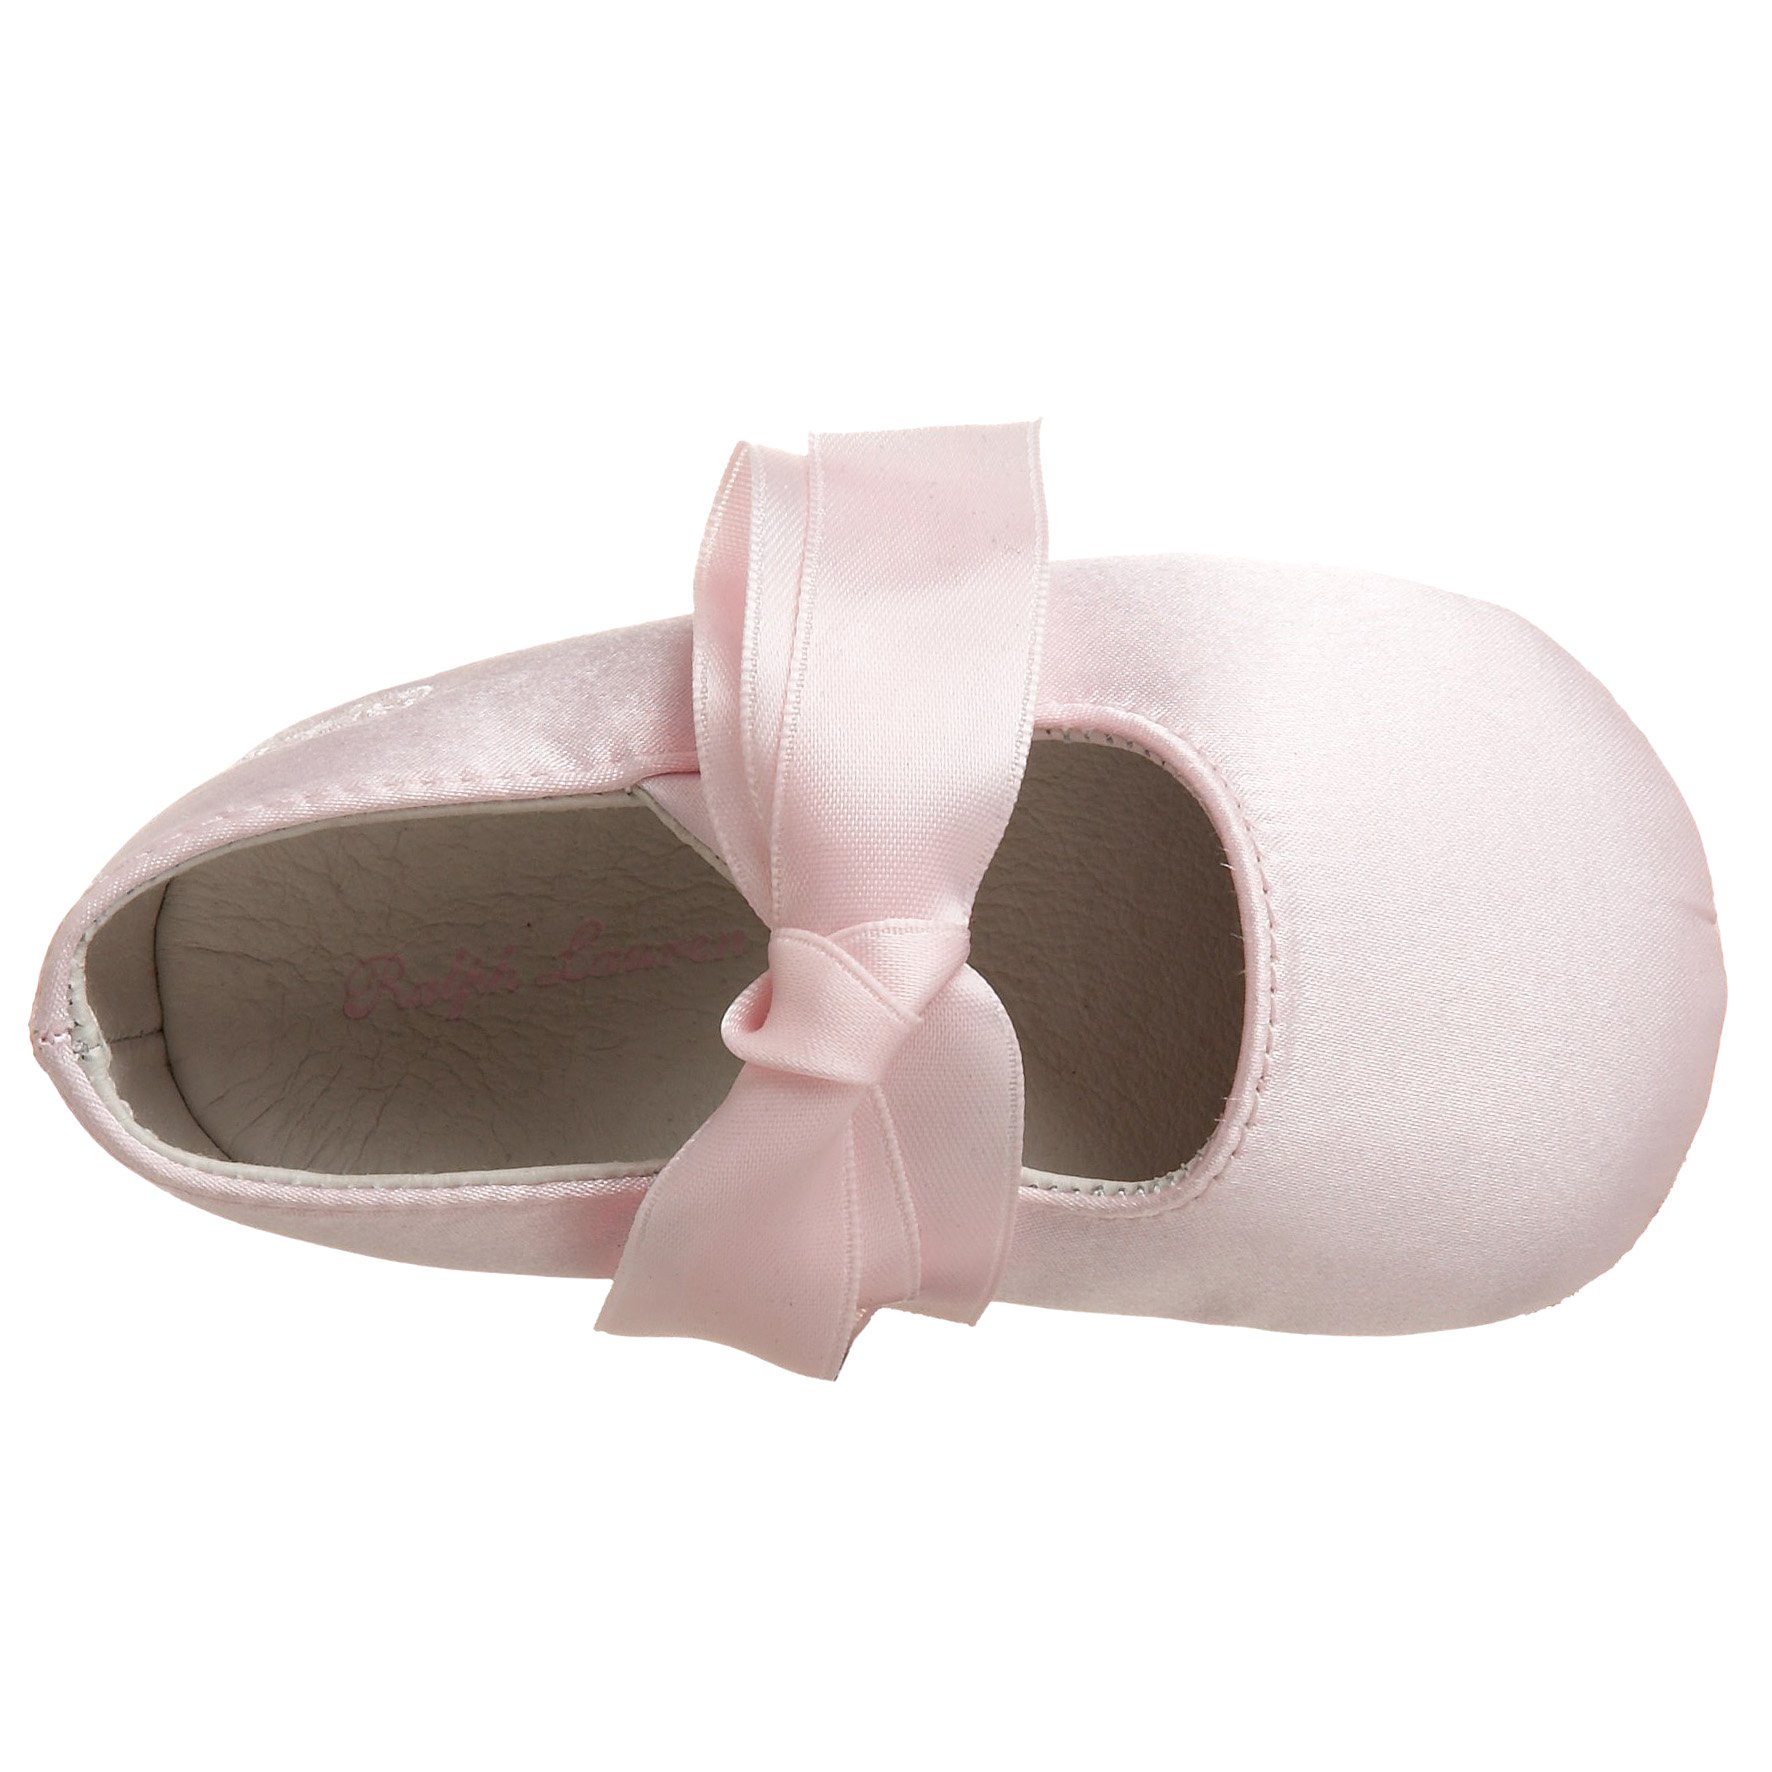 Ralph Lauren Layette baby girls Briley Soft Sole (Infant/Toddler) ballet flats, Pink Satin, 1 Infant M US